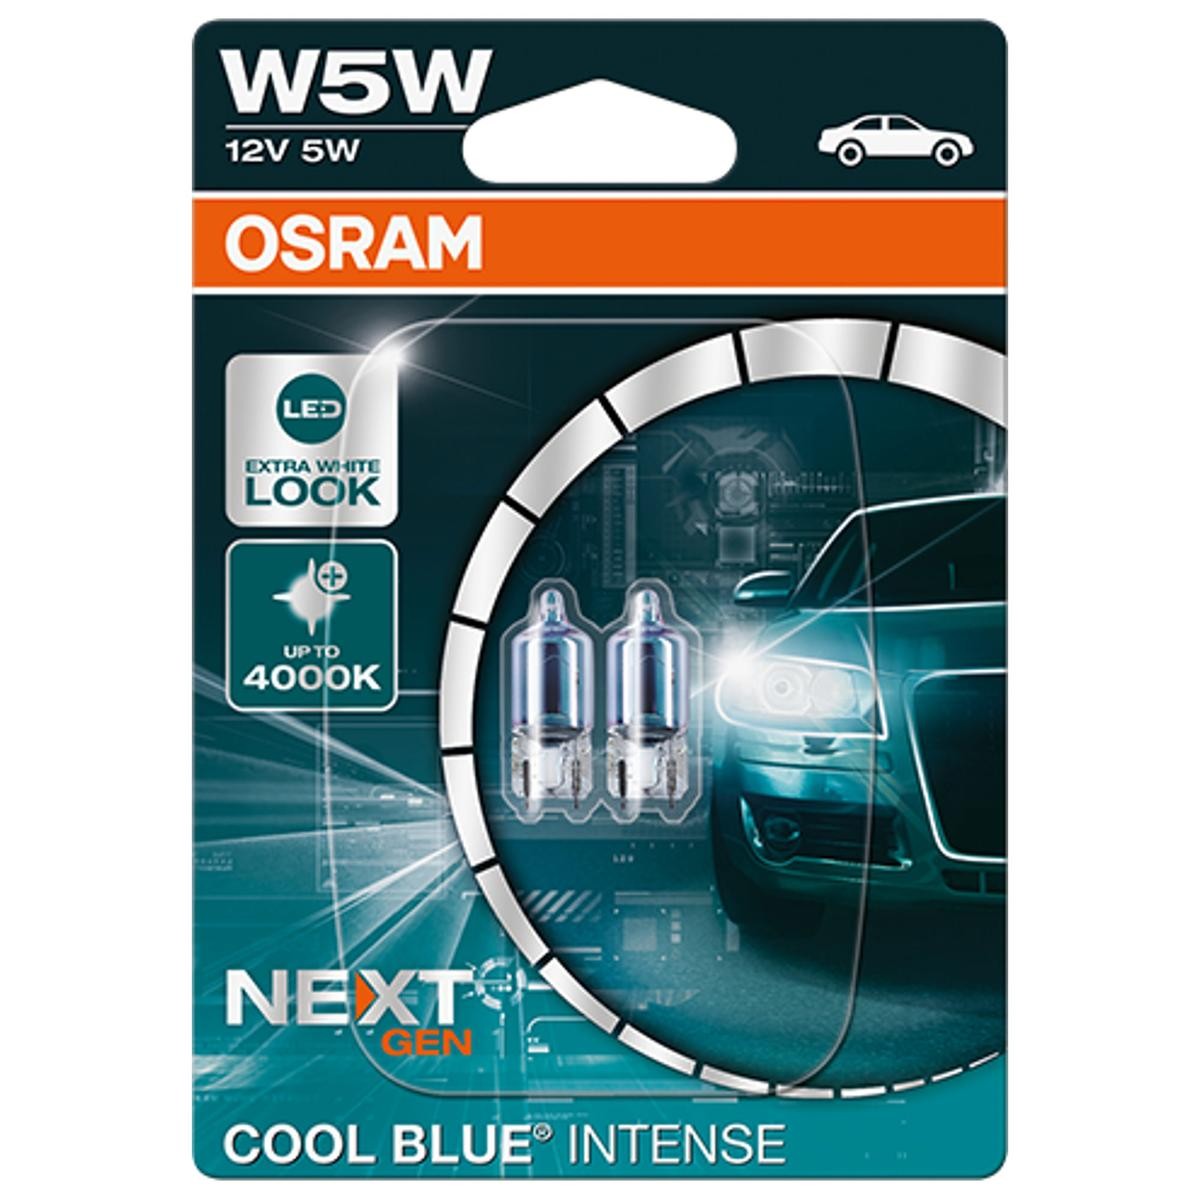 VESPA LX Blinkerbirne 12V 5W, W5W OSRAM COOL BLUE INTENSE next Generation 2825CBN-02B